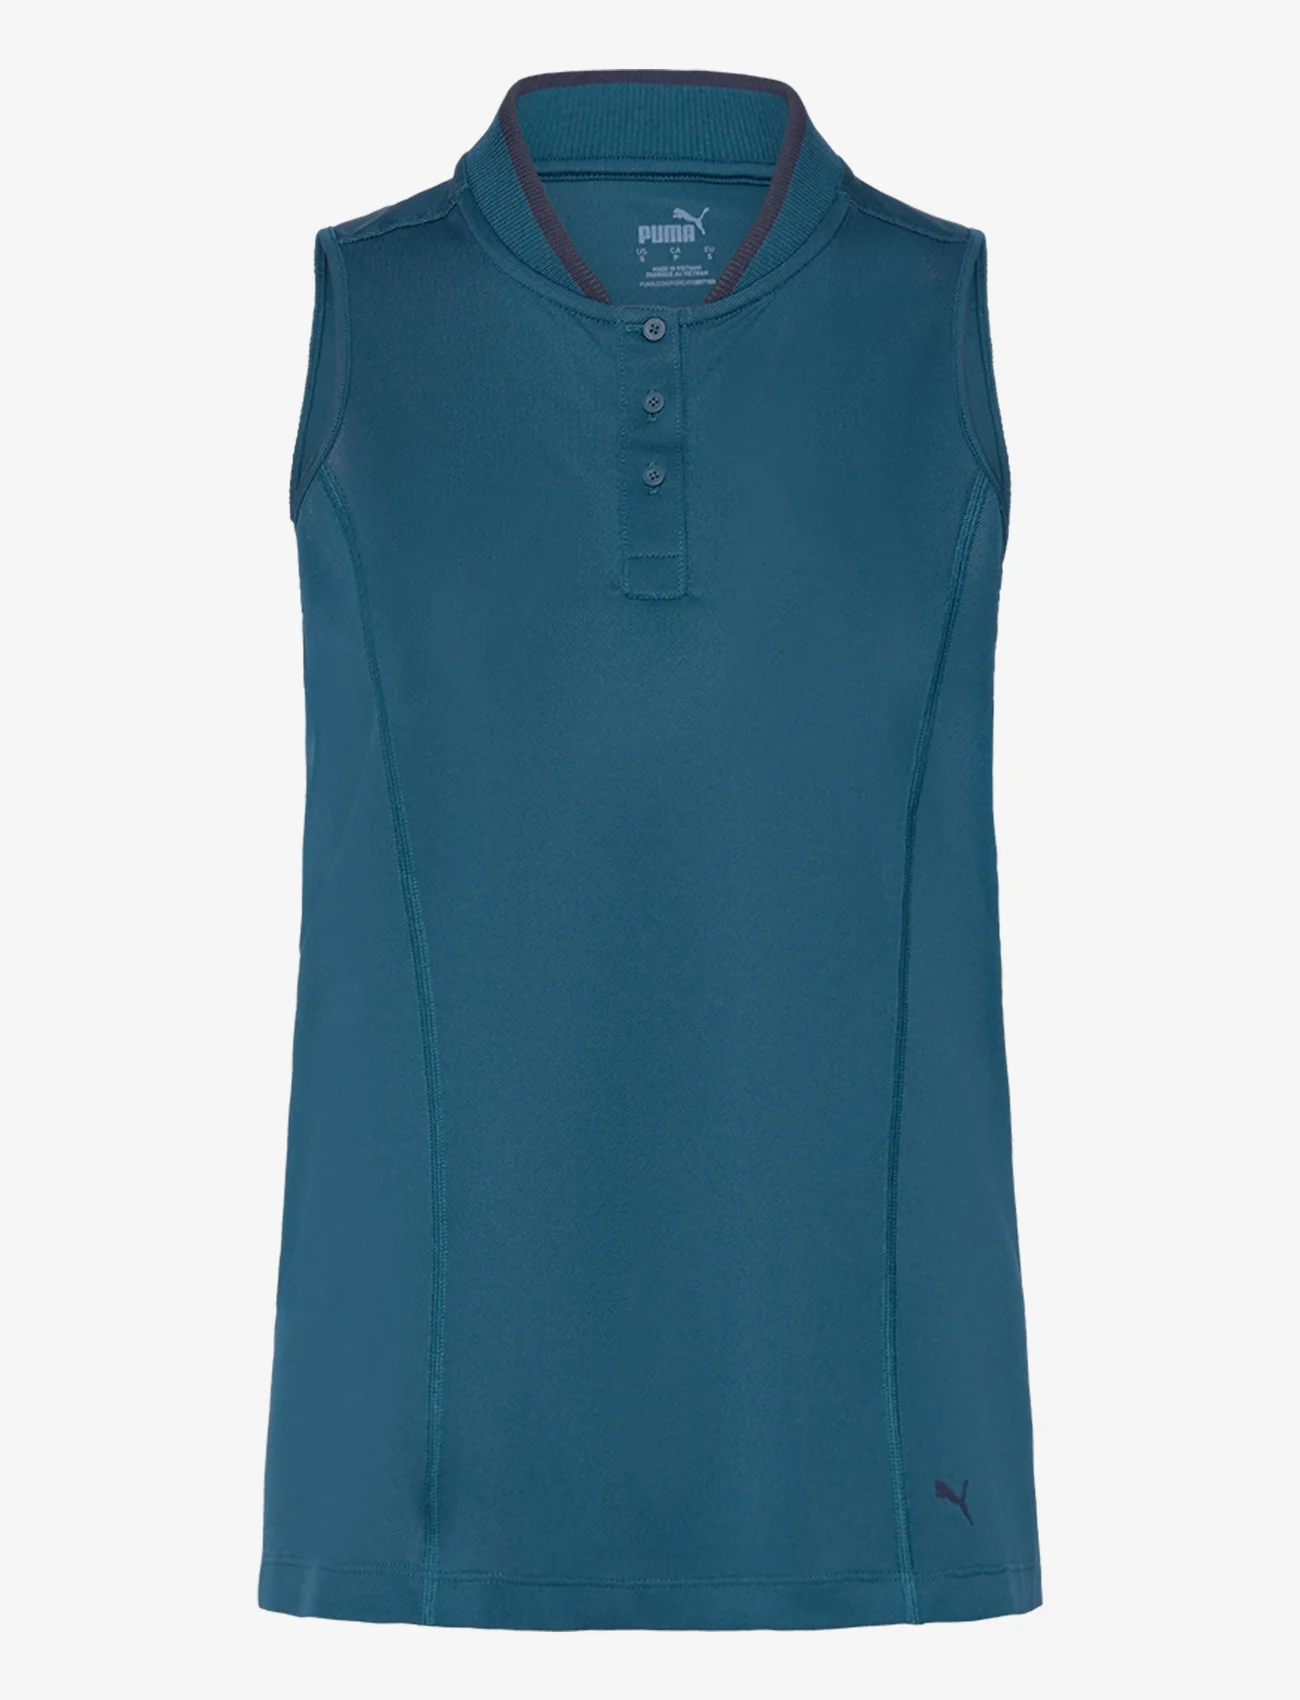 PUMA Golf - W Range SL Pique Top - polo marškinėliai - ocean tropic - 0